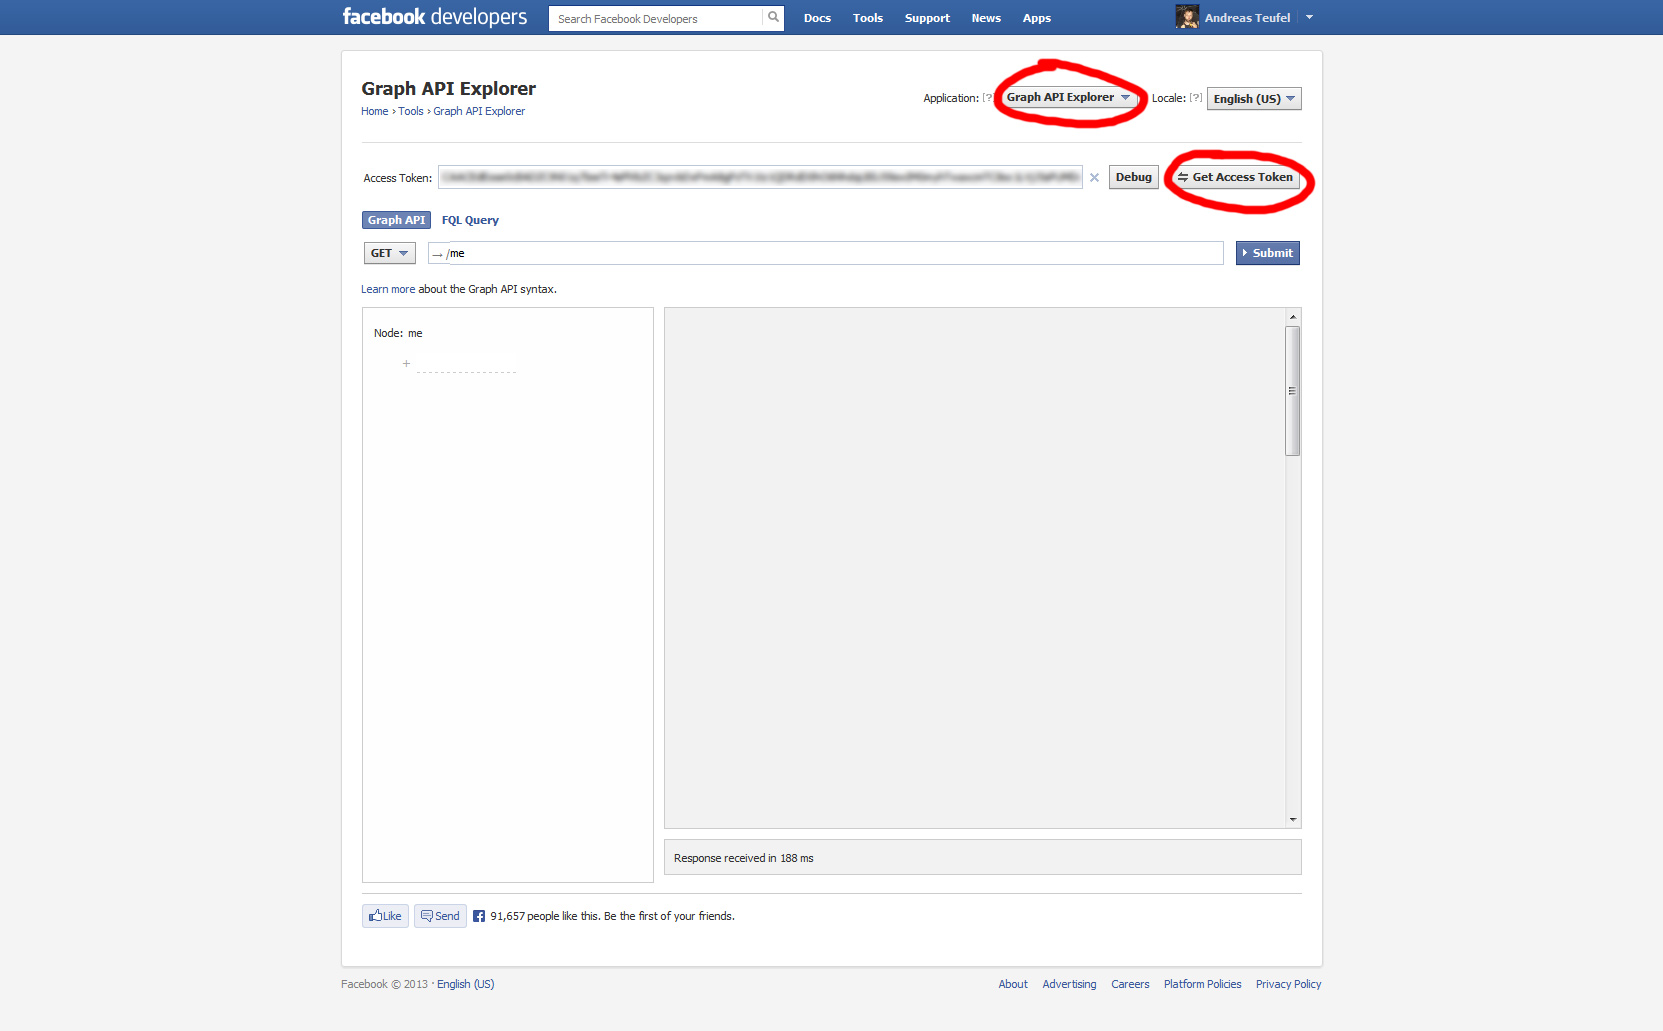 Access Facebook user profile data with FB Login - Opentracker